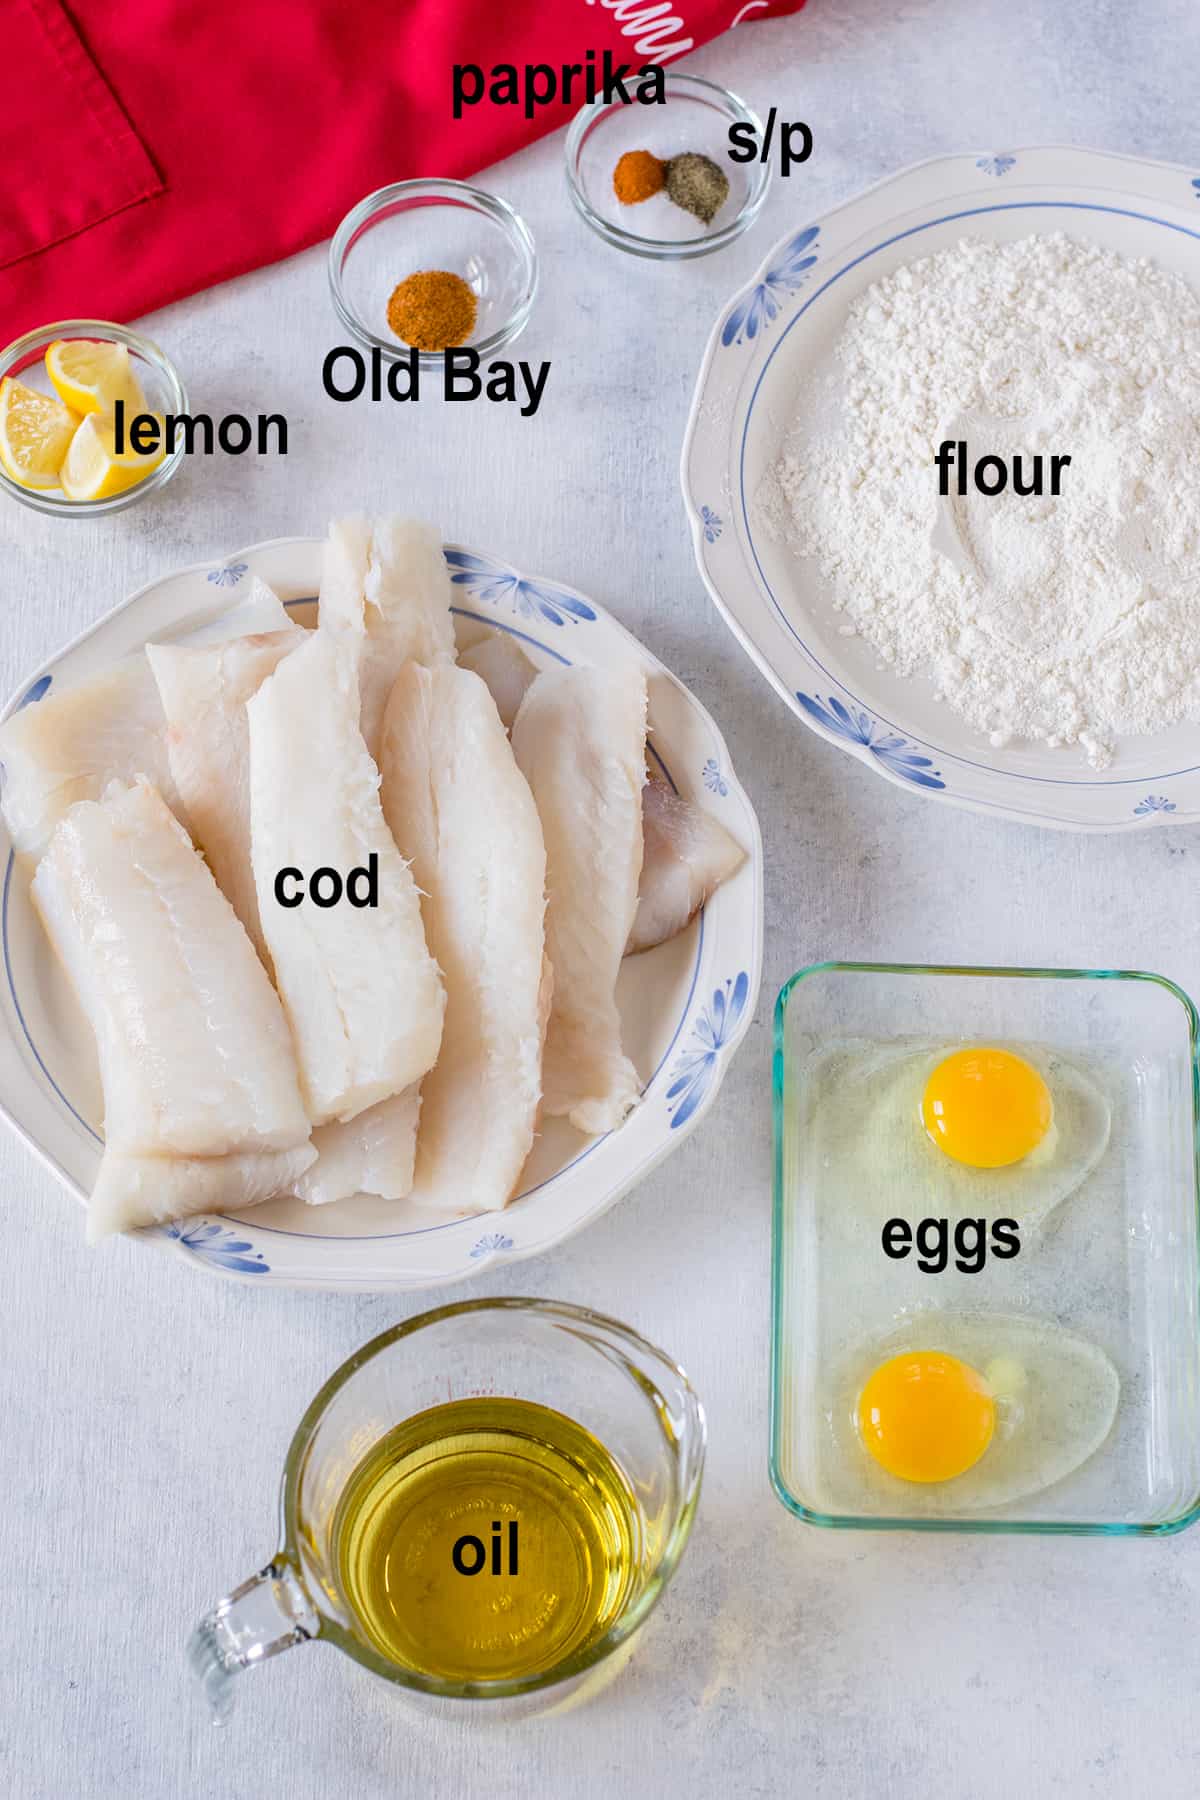 raw fish, lemon, spices, flour, eggs, oil